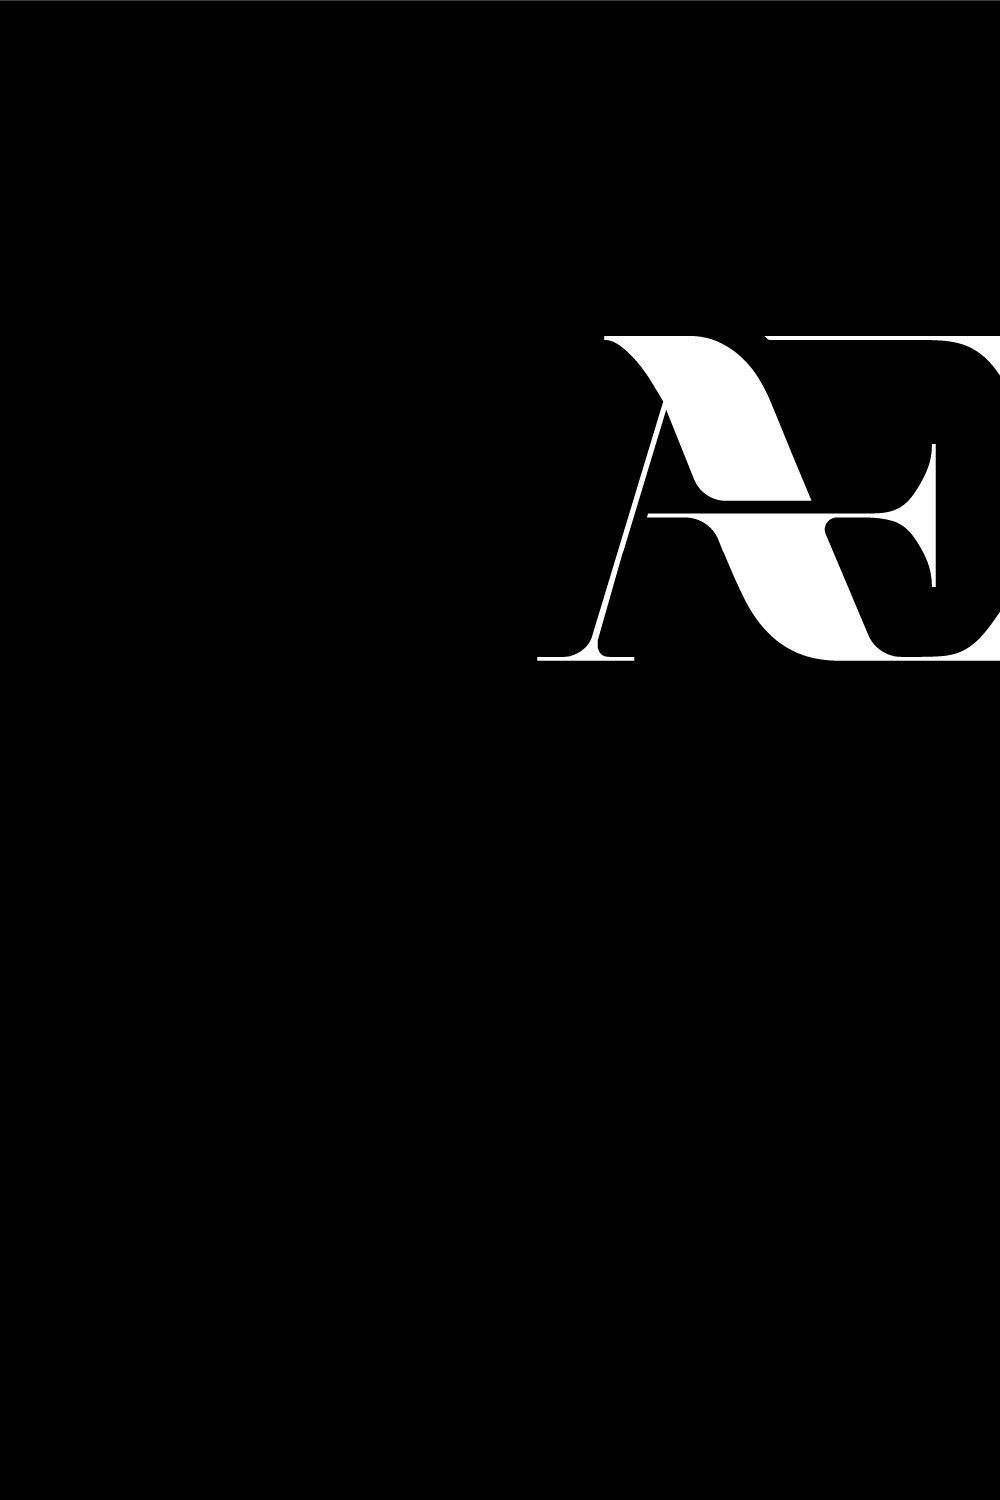 luxury black and white logo design. pinterest preview image.